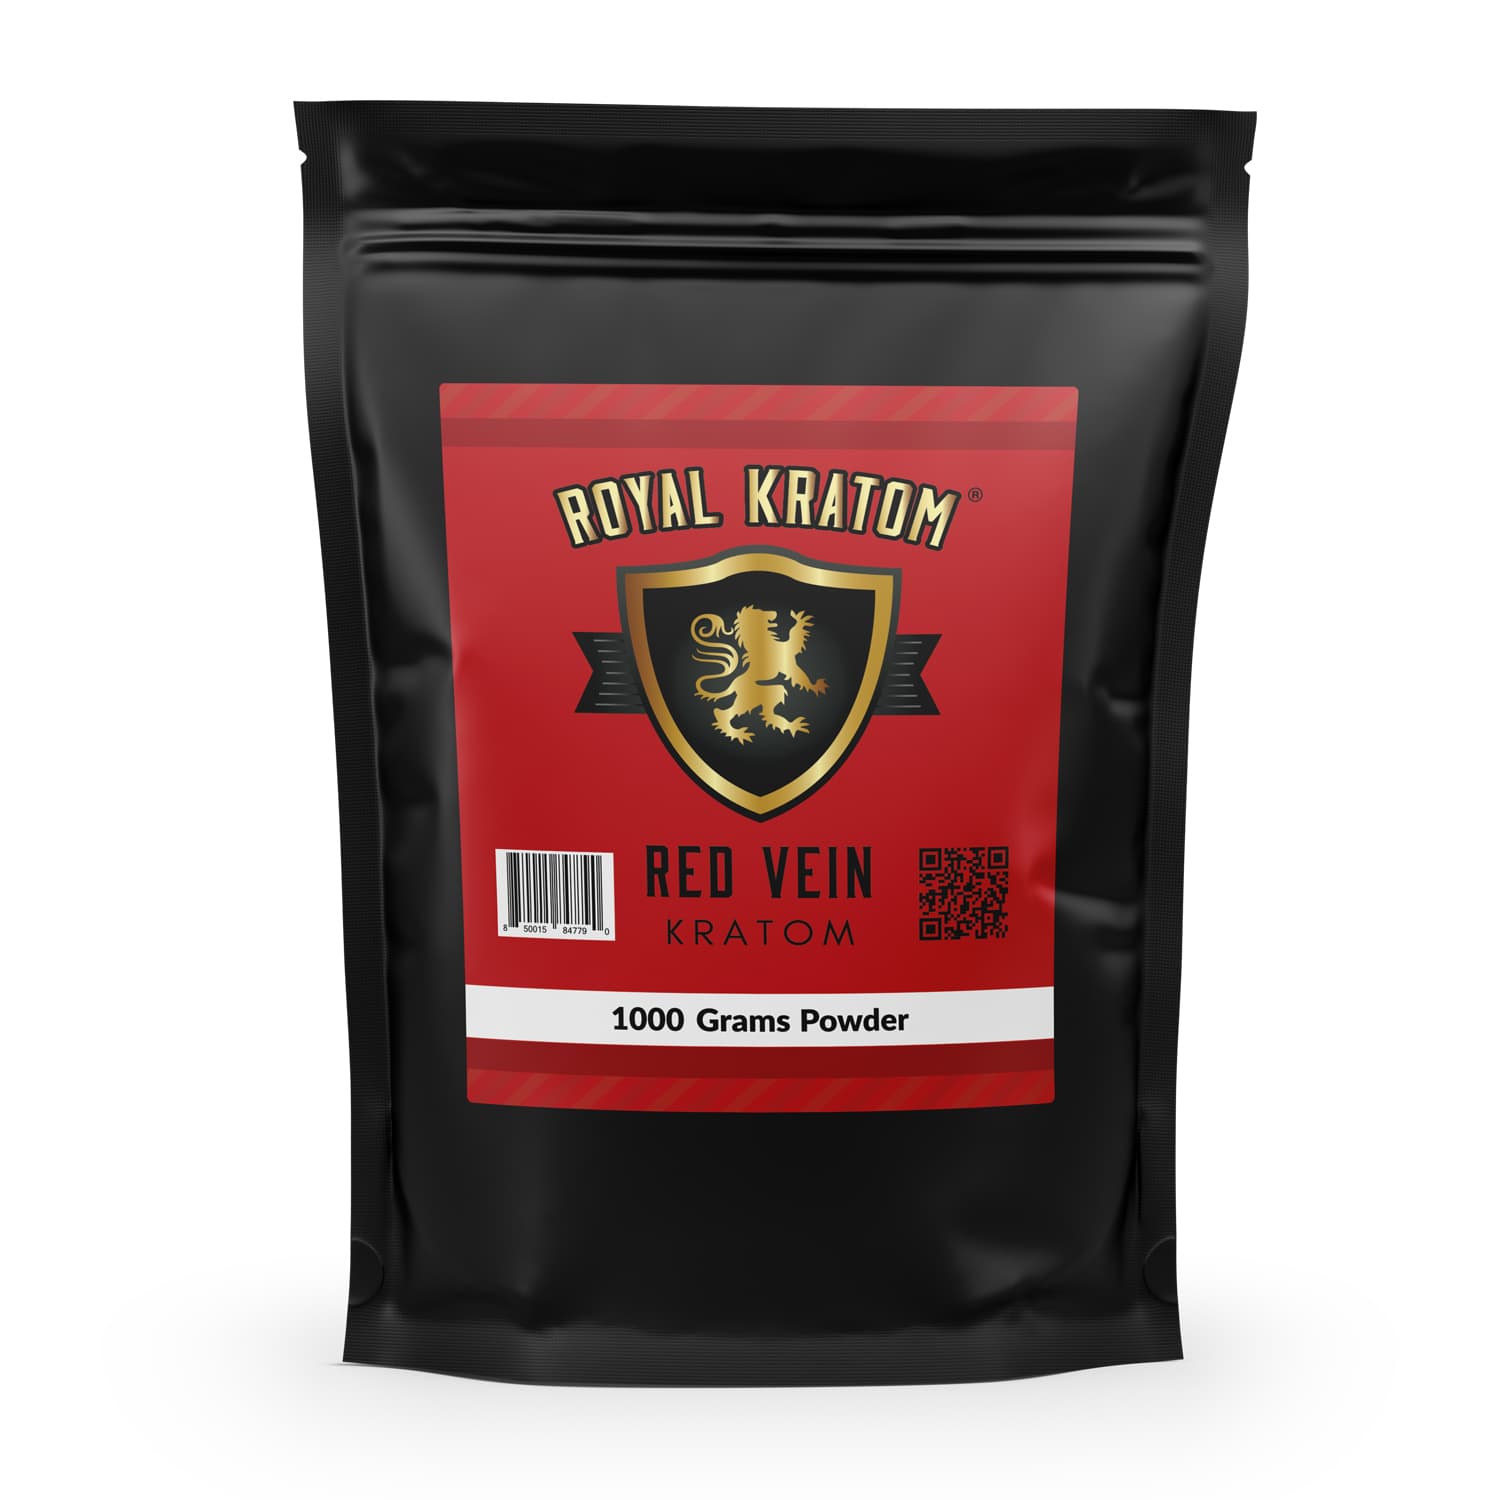 Royal Kratom Red Vein Kratom Powder 1000 Grams Kilo package